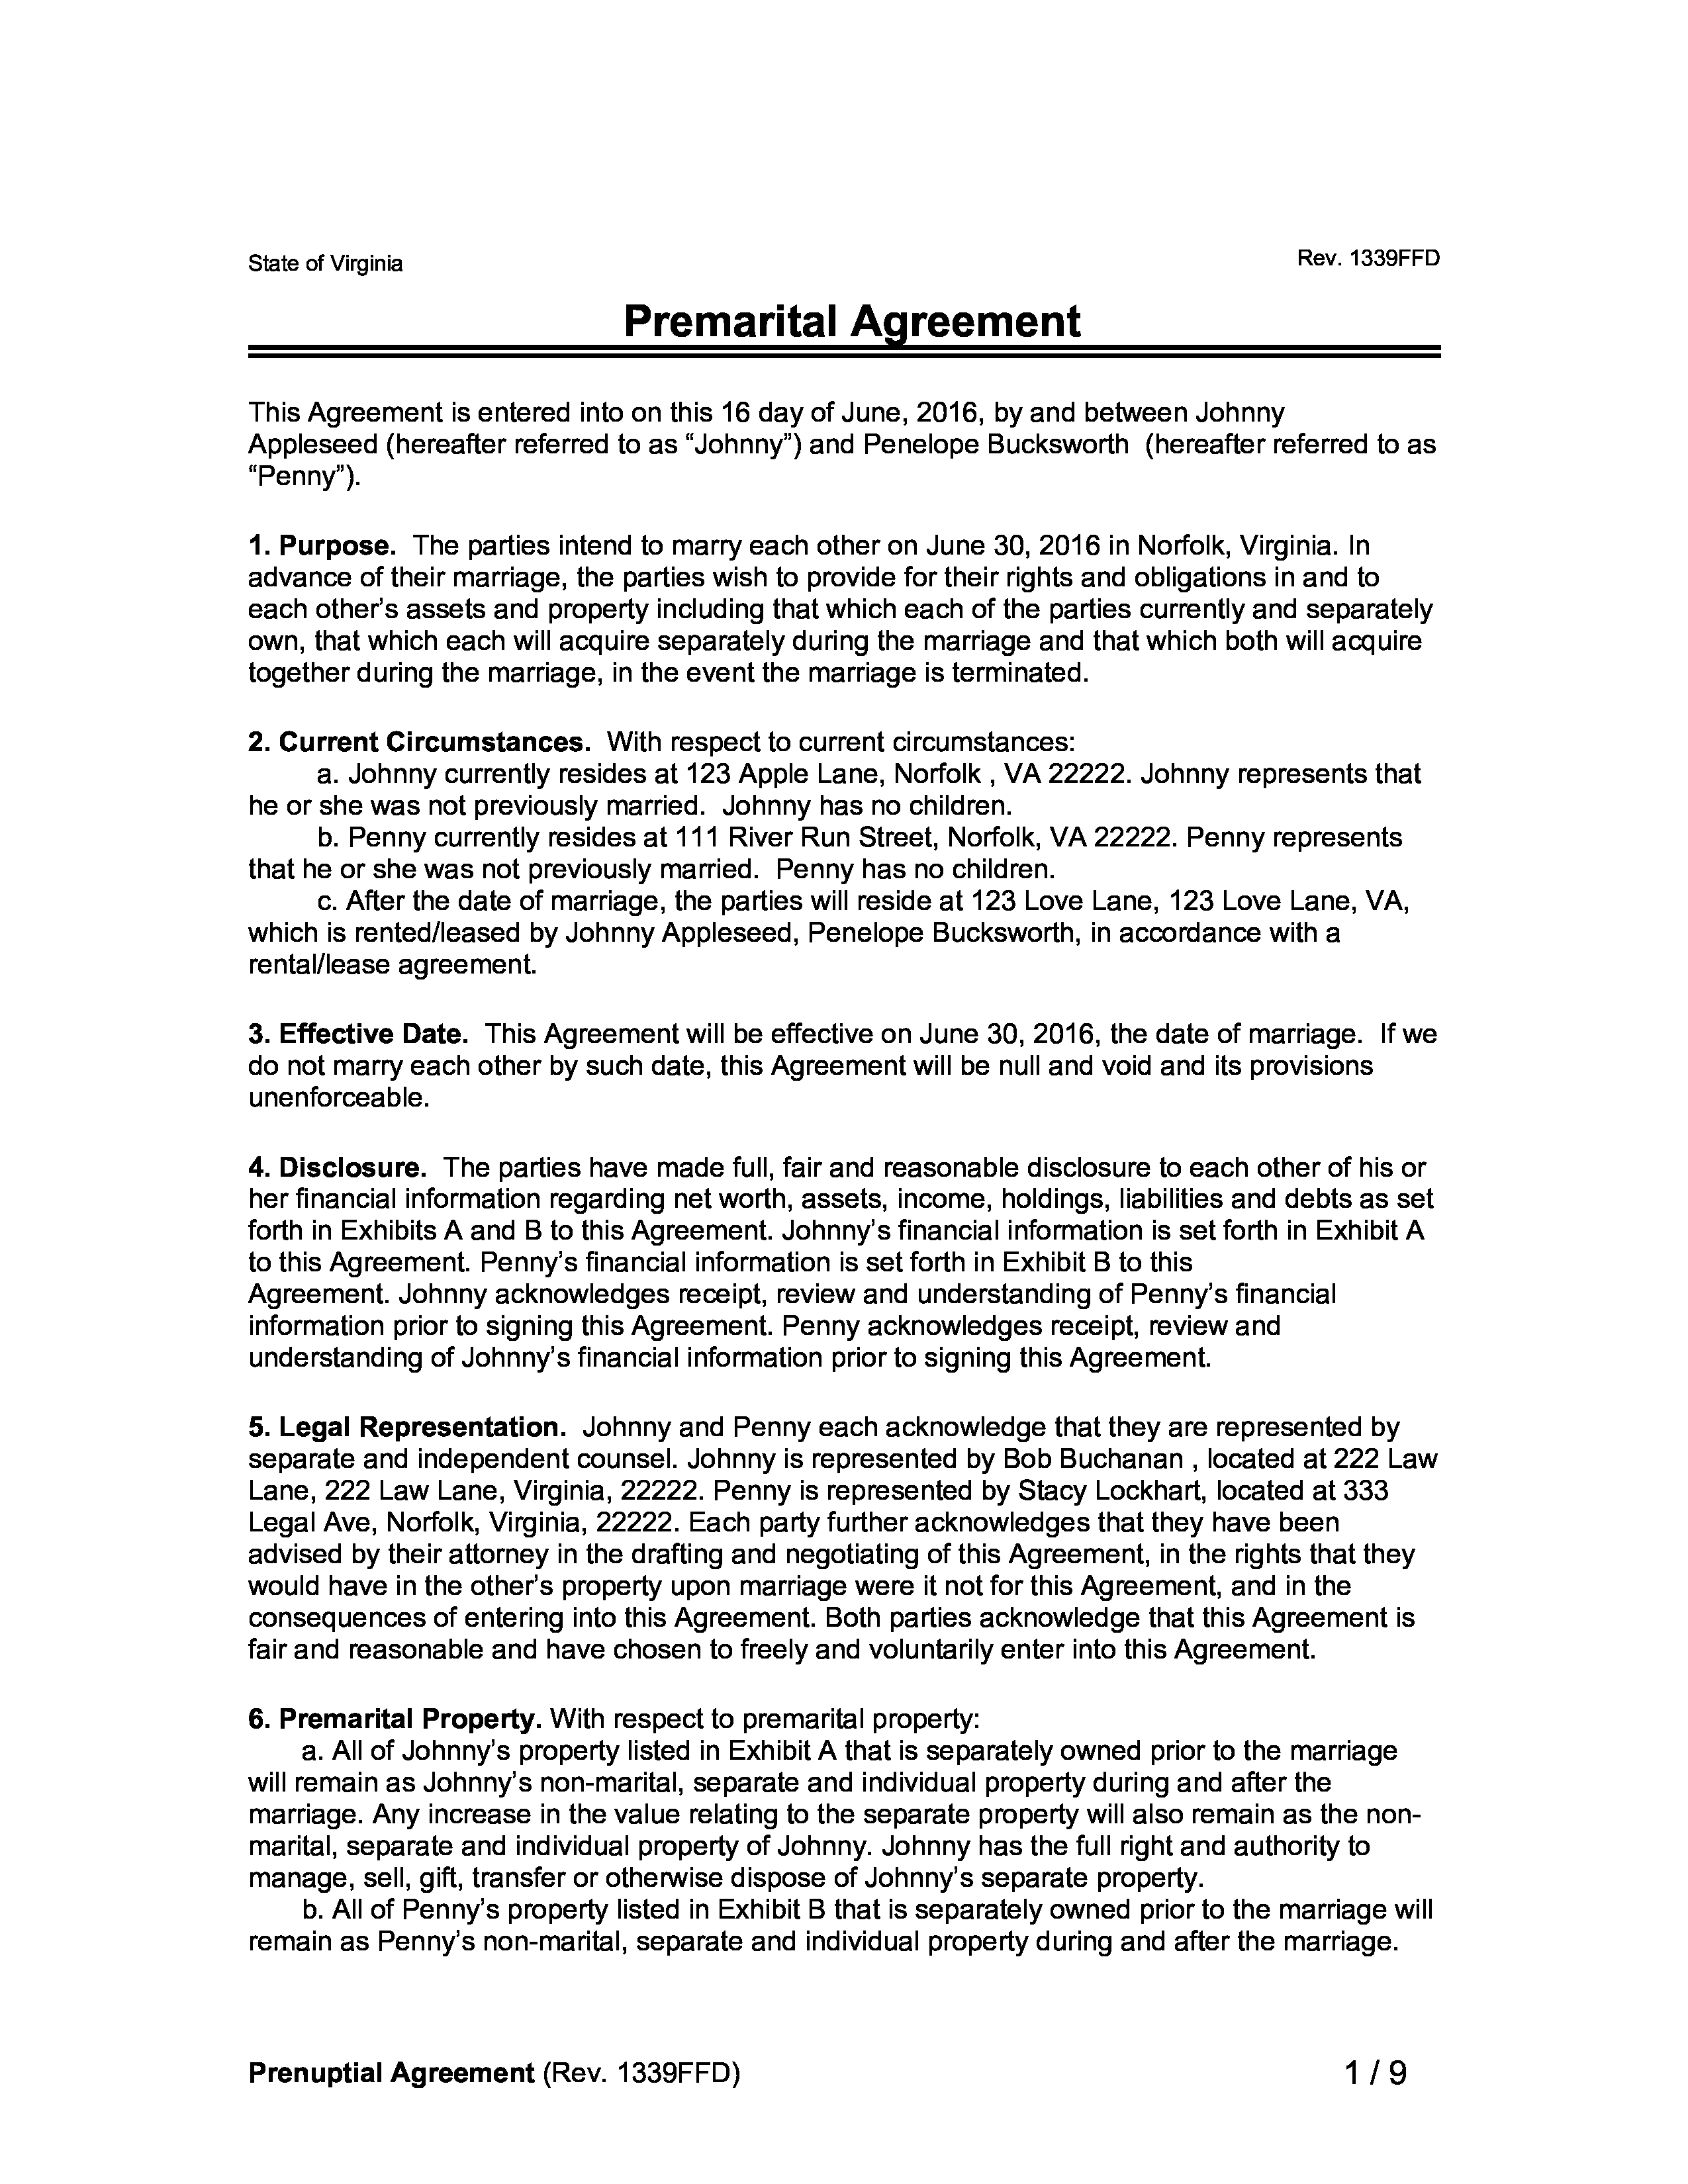 Prenuptial Agreement Virginia 20 Example Prenuptial Agreement Virginia Sample Docs For Word For